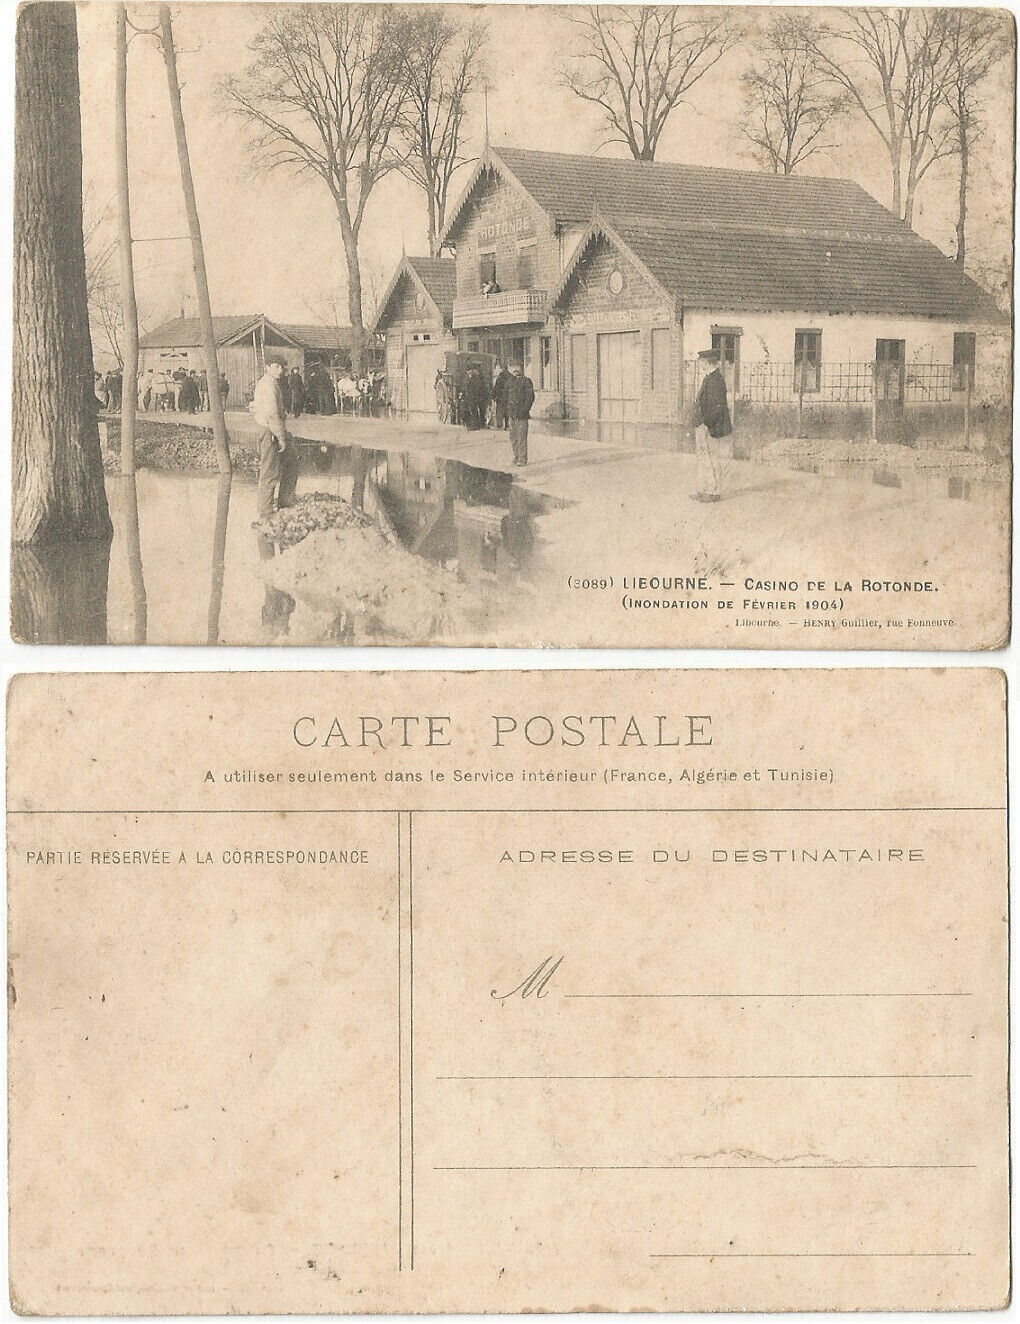 CPA Floodation February 1904 Casino de la Rotonde LIBOURNE Gironde Postcard (425)